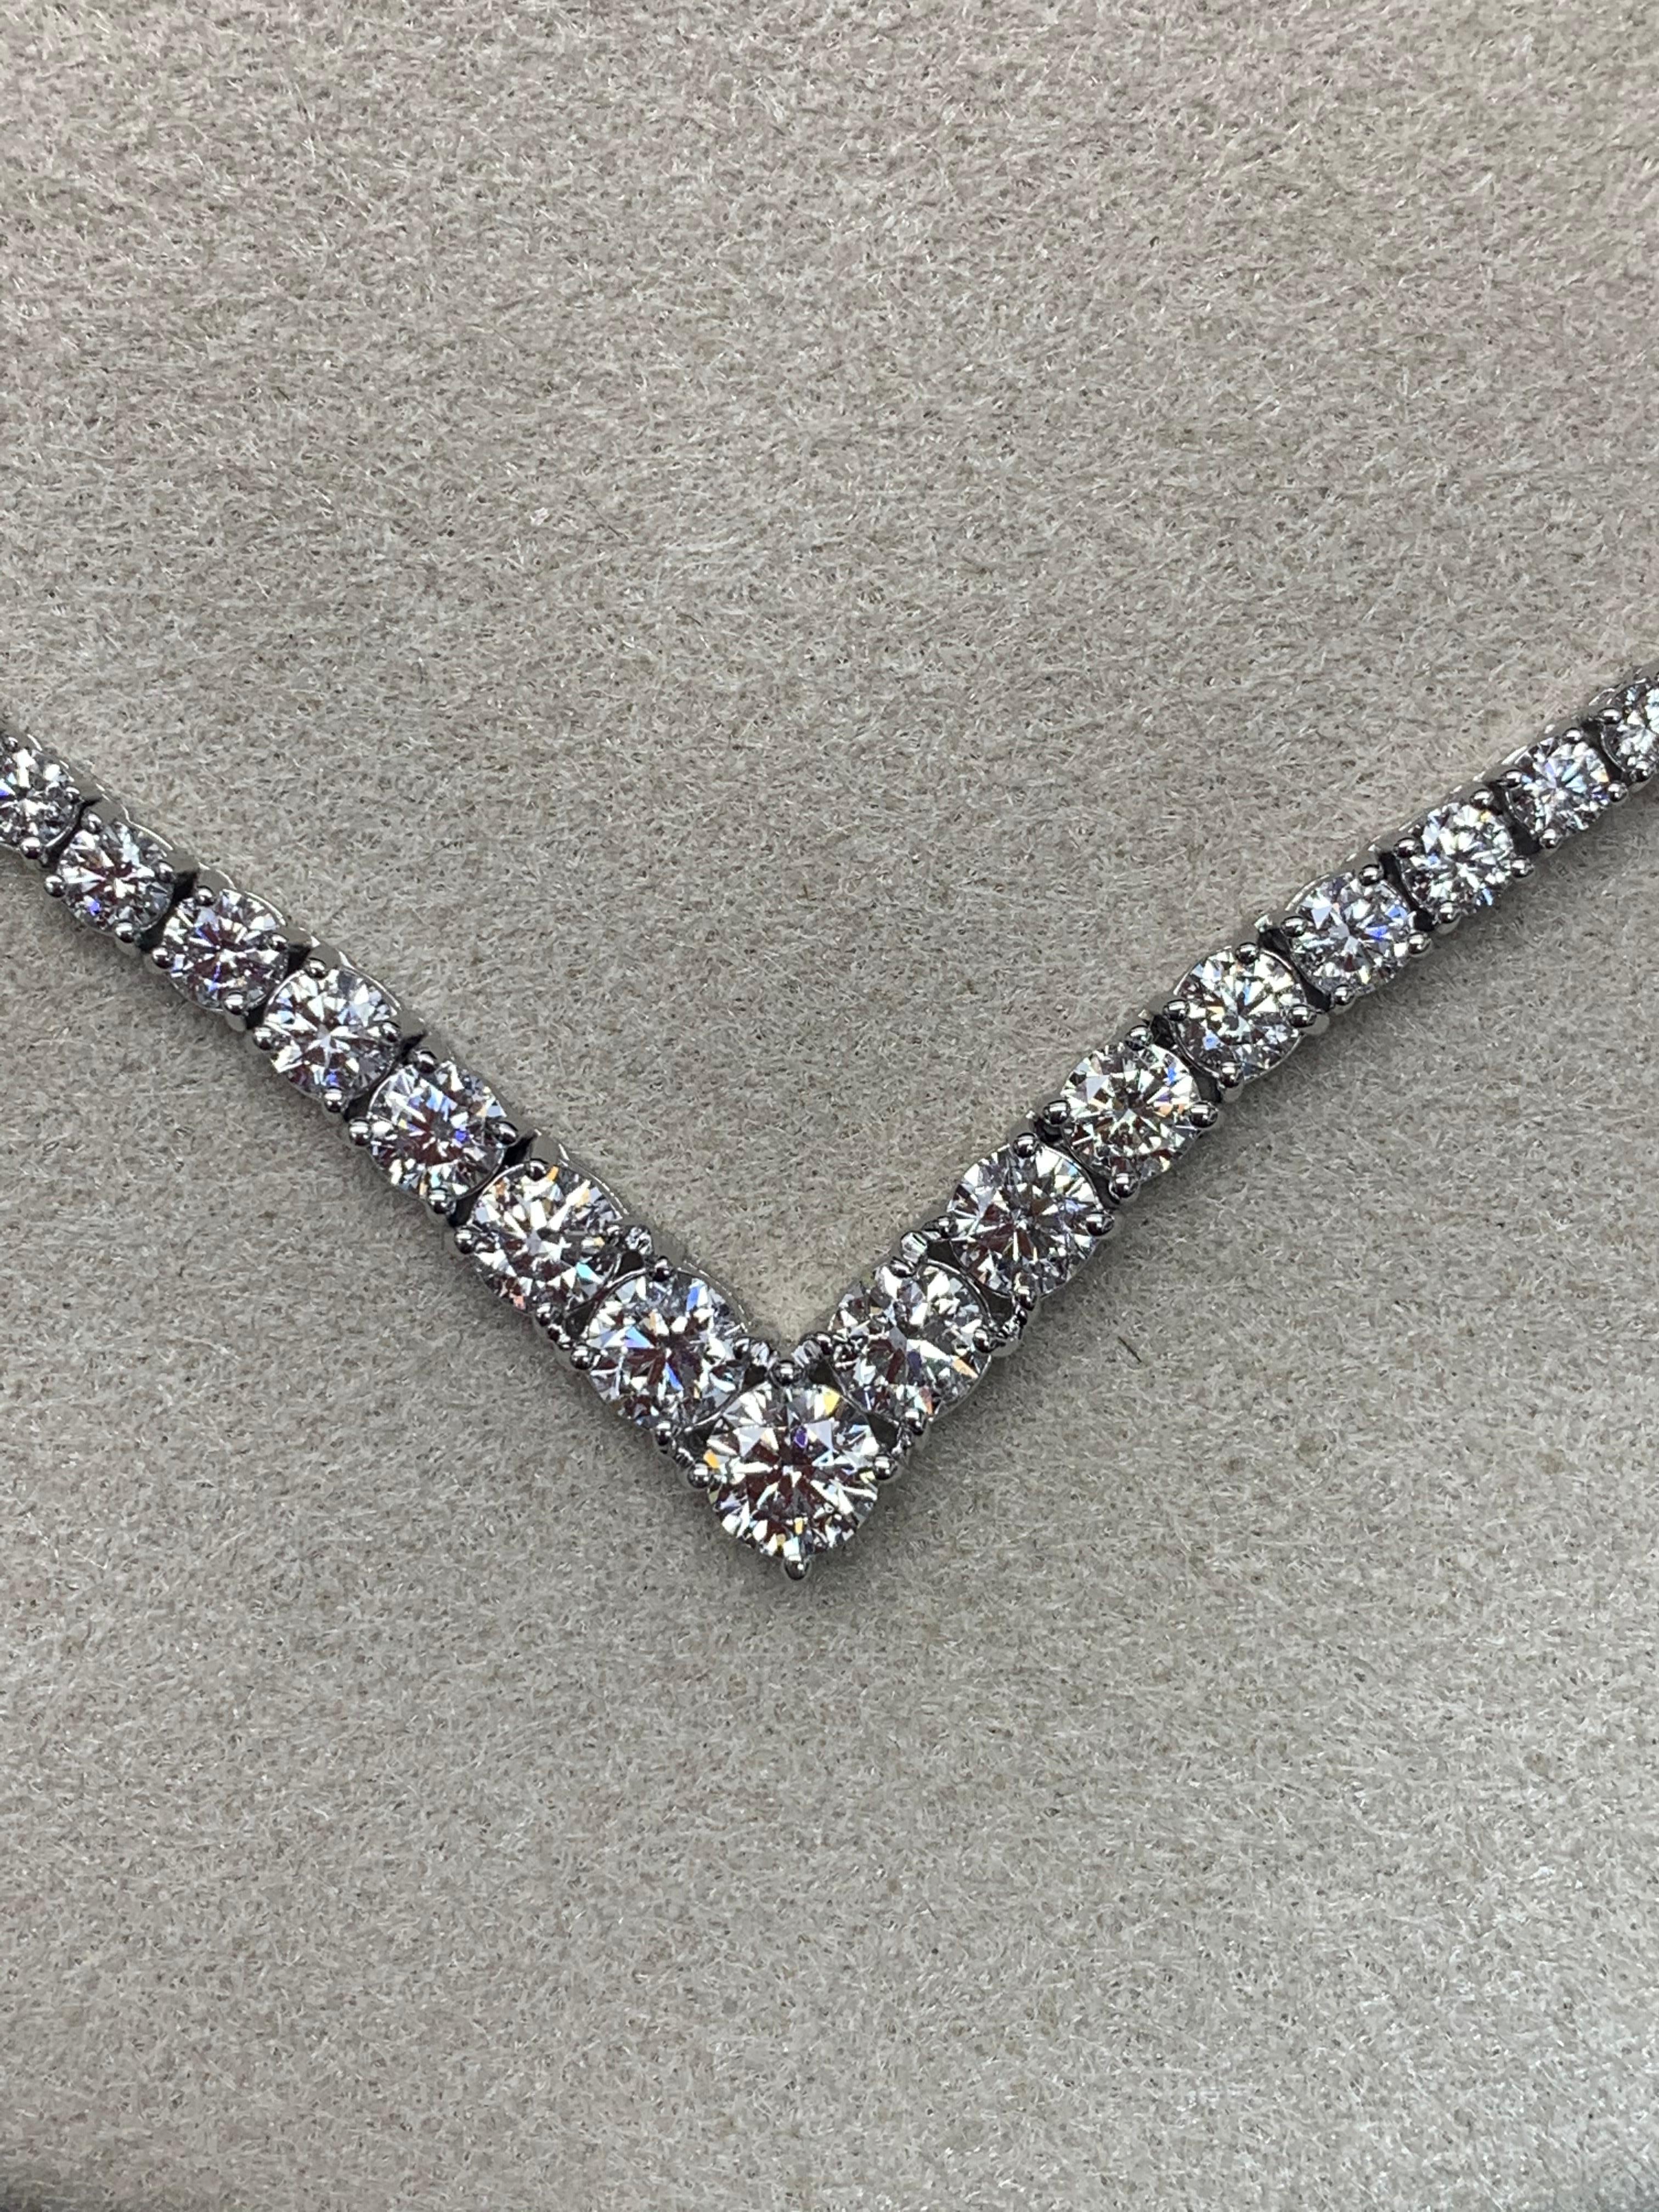 5.05 Carat Round Brilliant Diamond Graduating Necklace in 14K White Gold For Sale 1